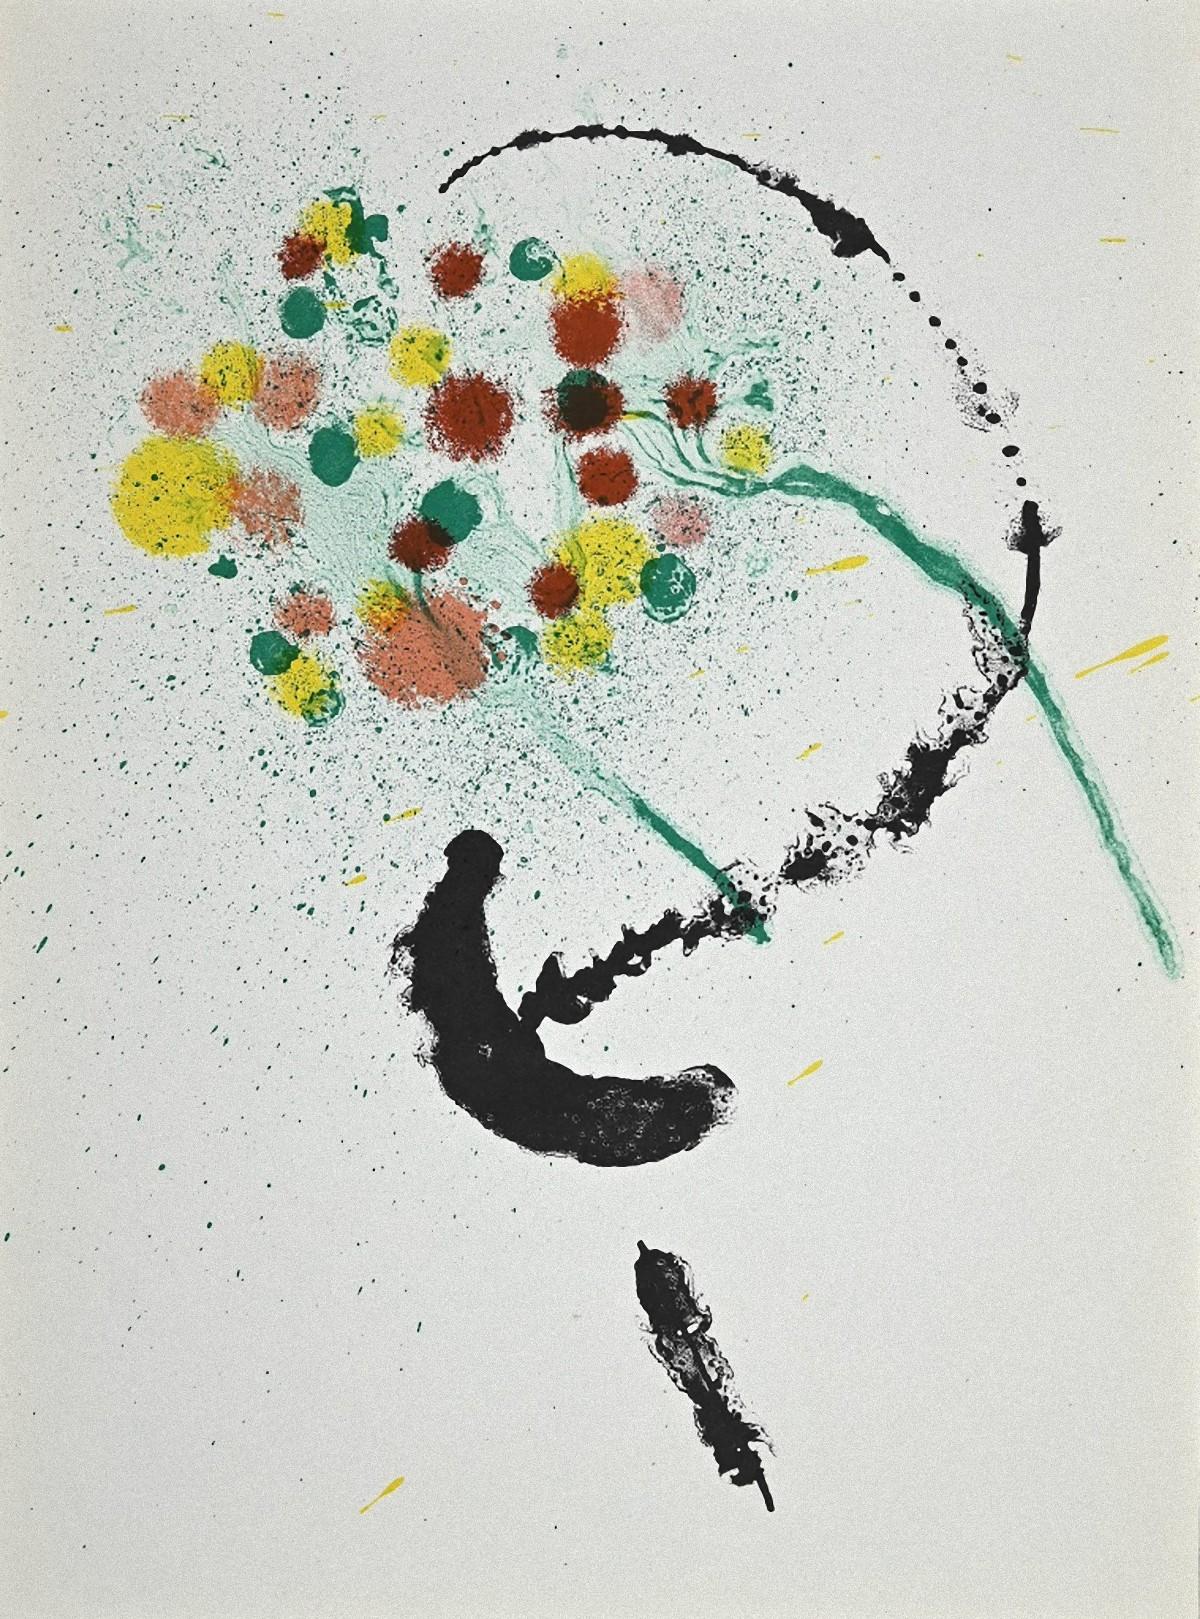 Joan Miró Abstract Print - Composition 1968 - Original Lithograph by Joan Mirò - 1968